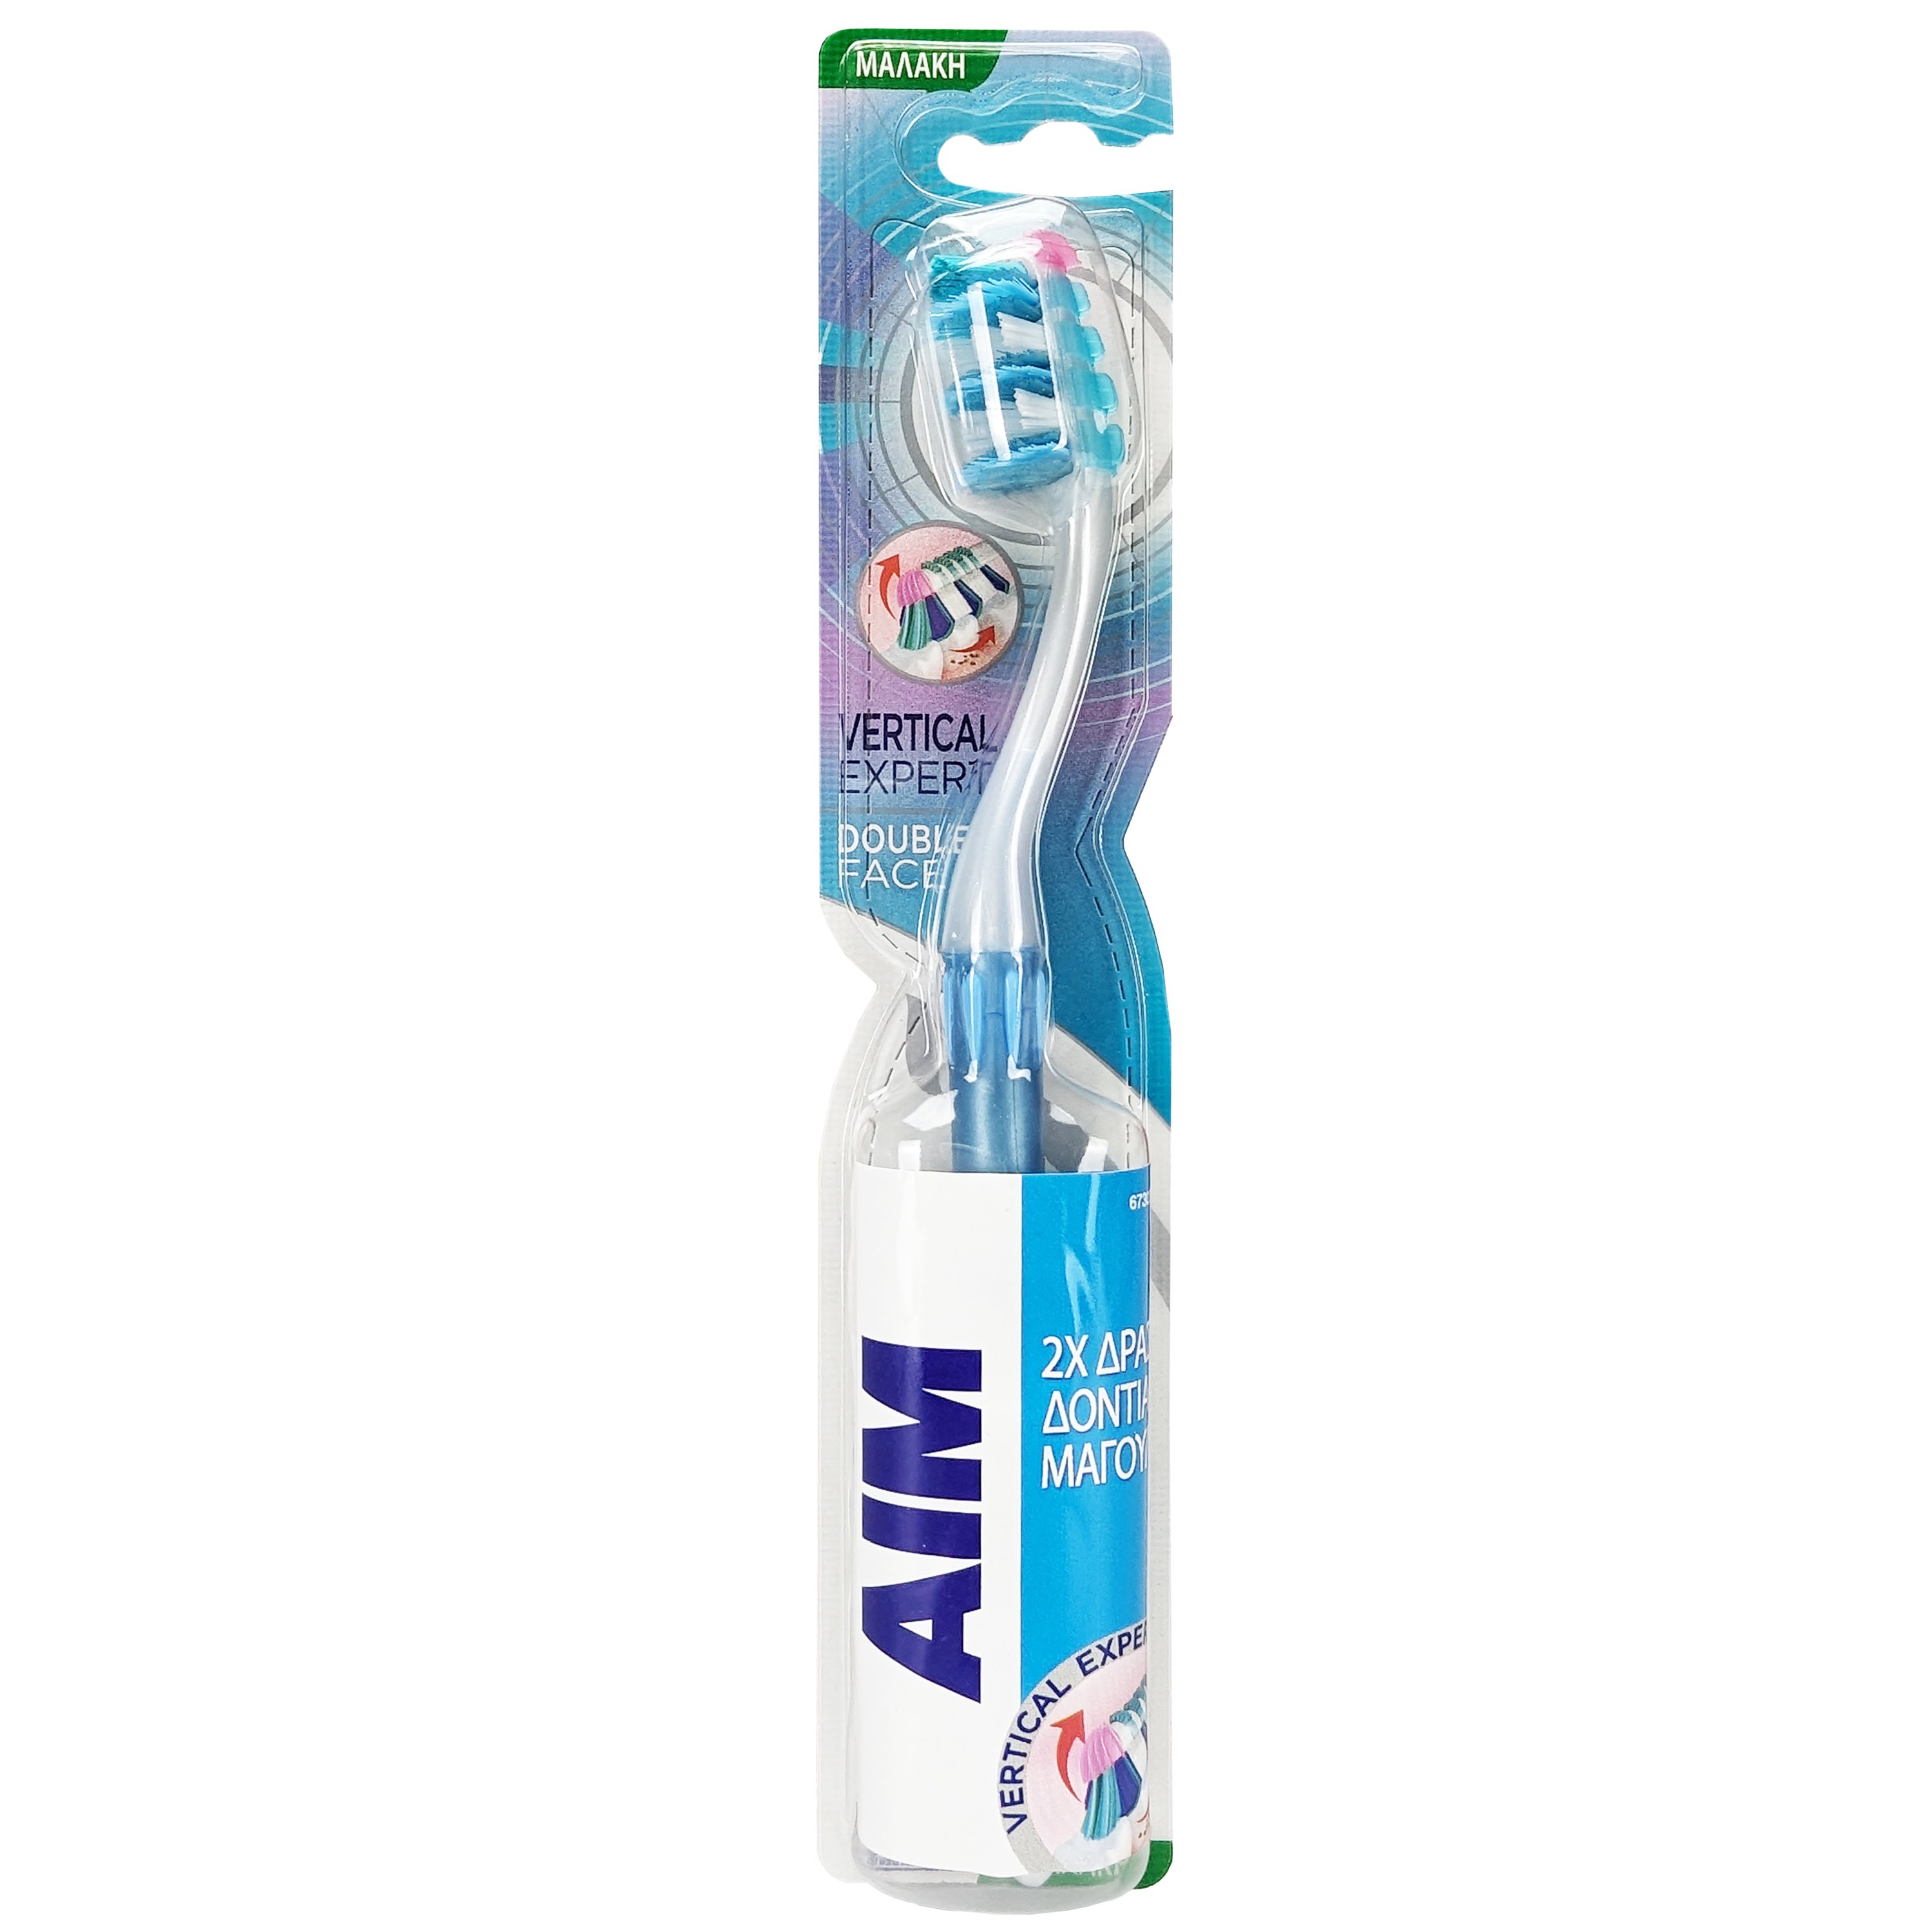 Aim Vertical Expert Double Face Soft Toothbrush Μαλακή Οδοντόβουρτσα με Θυσάνους σε Σχήμα Βεντάλιας για Καθαρισμό των Μεσοδόντιων Διαστημάτων 1 Τεμάχιο – Γαλάζιο